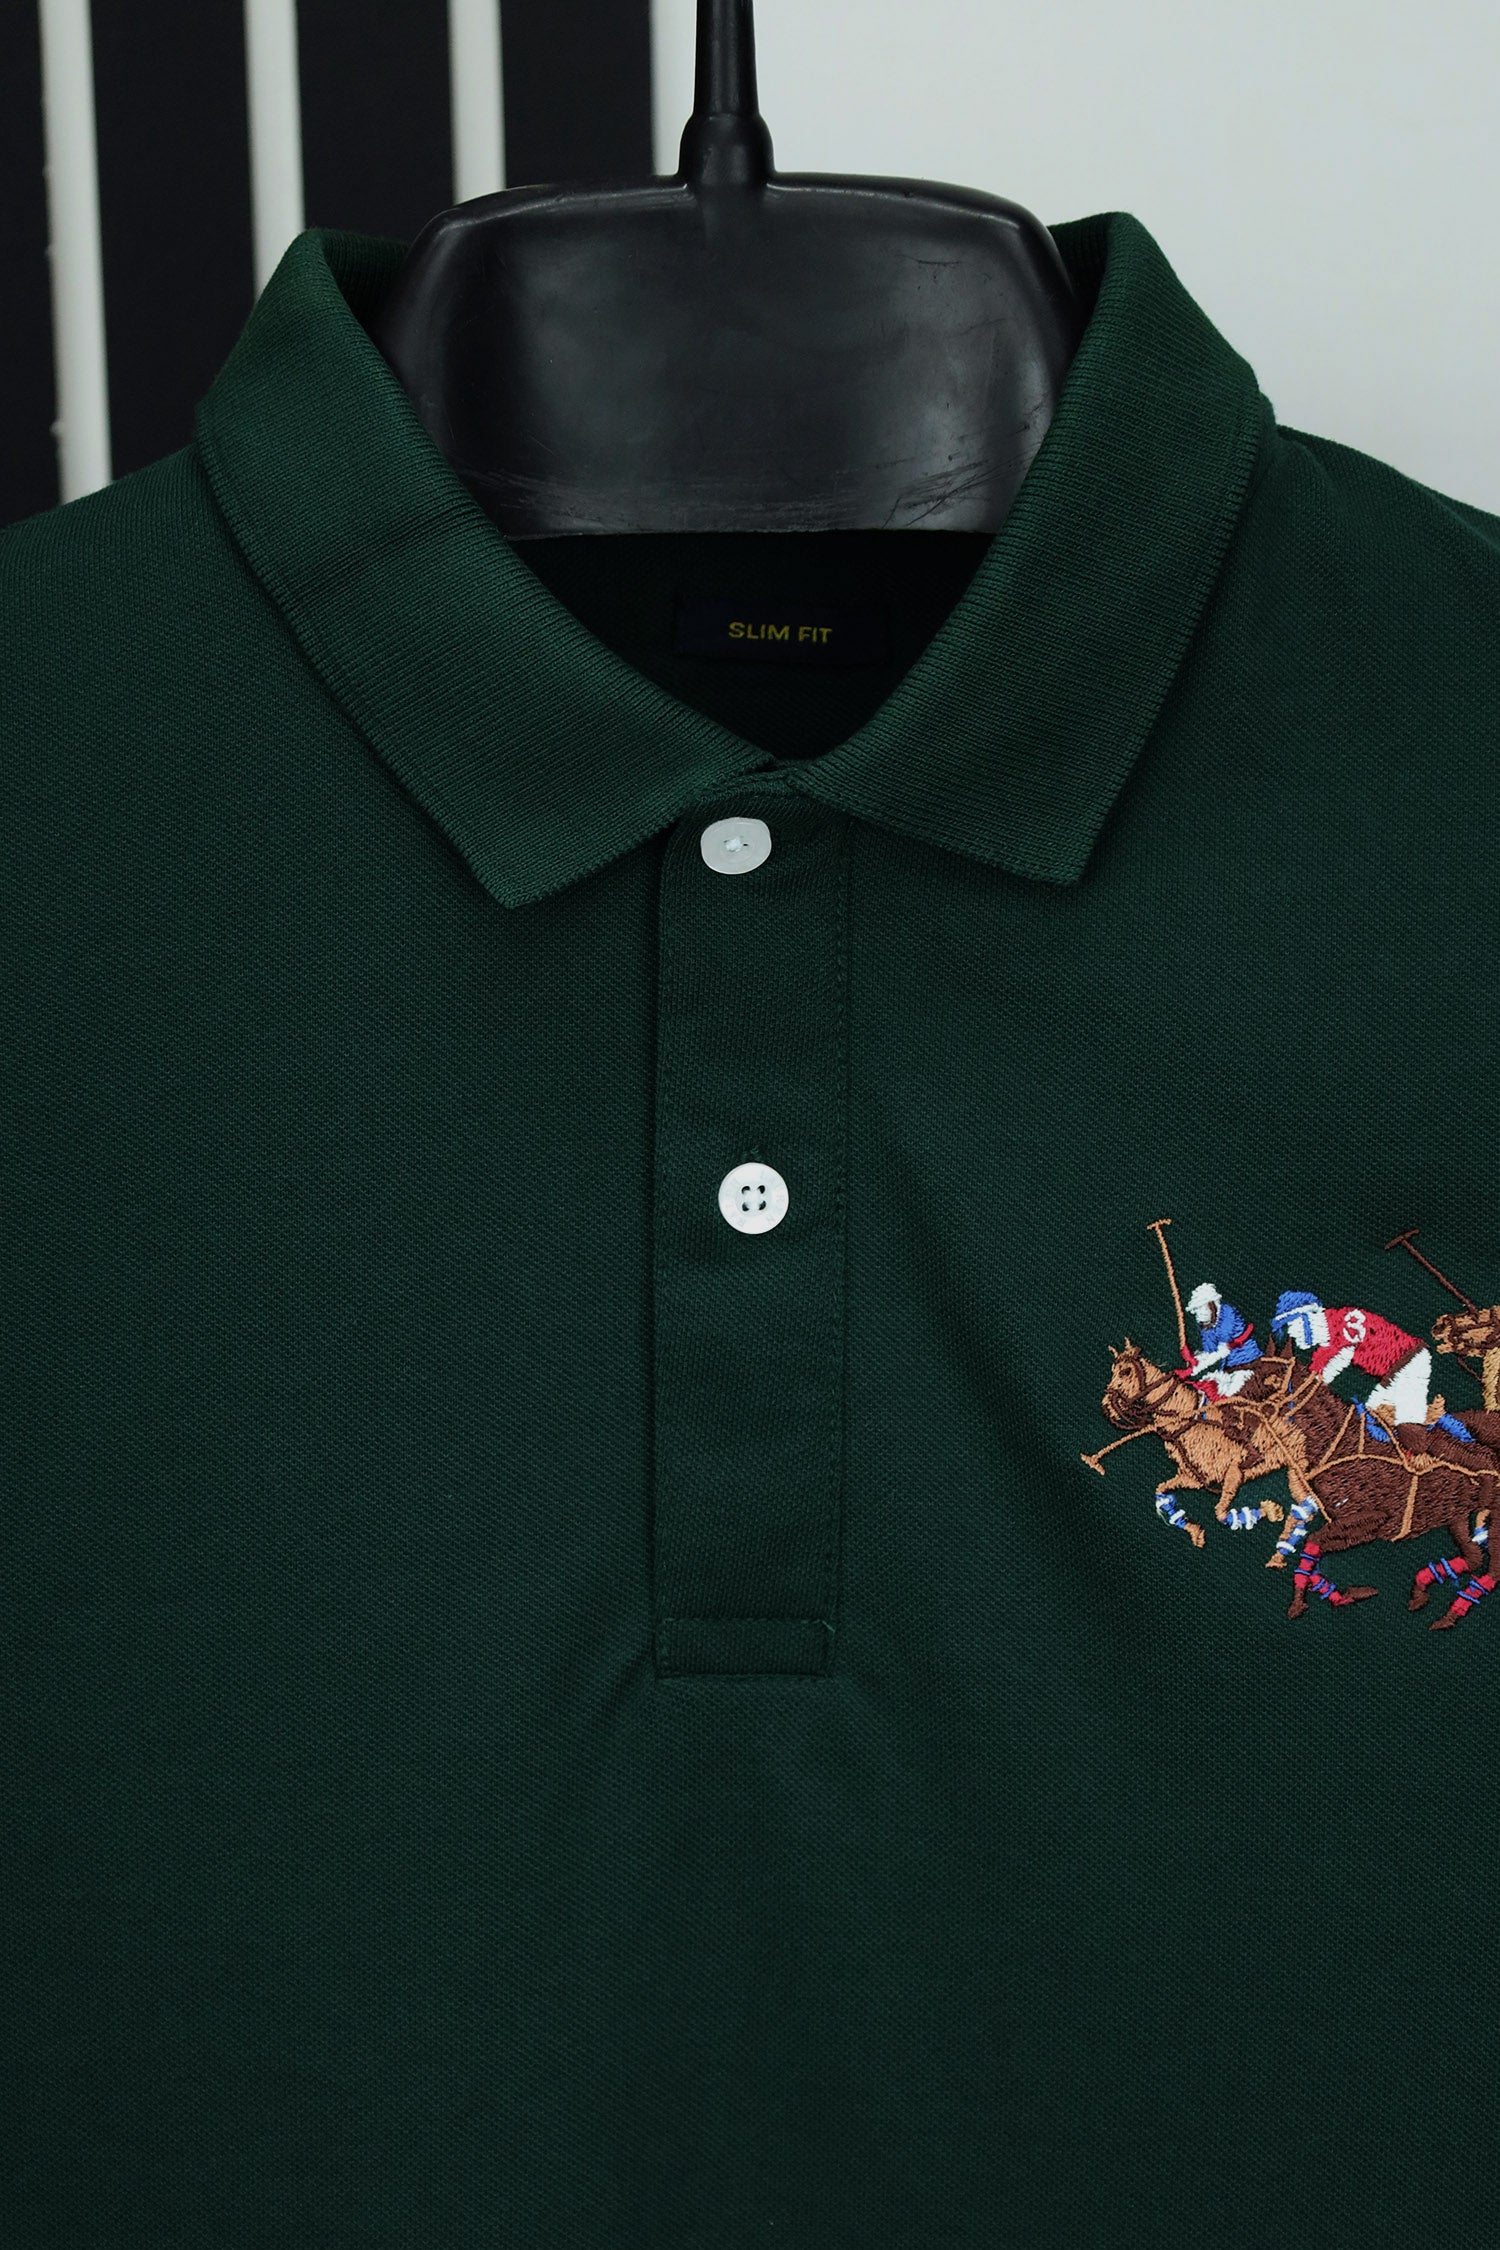 Rlph Laren Men's Polo Triple Pony Shirt